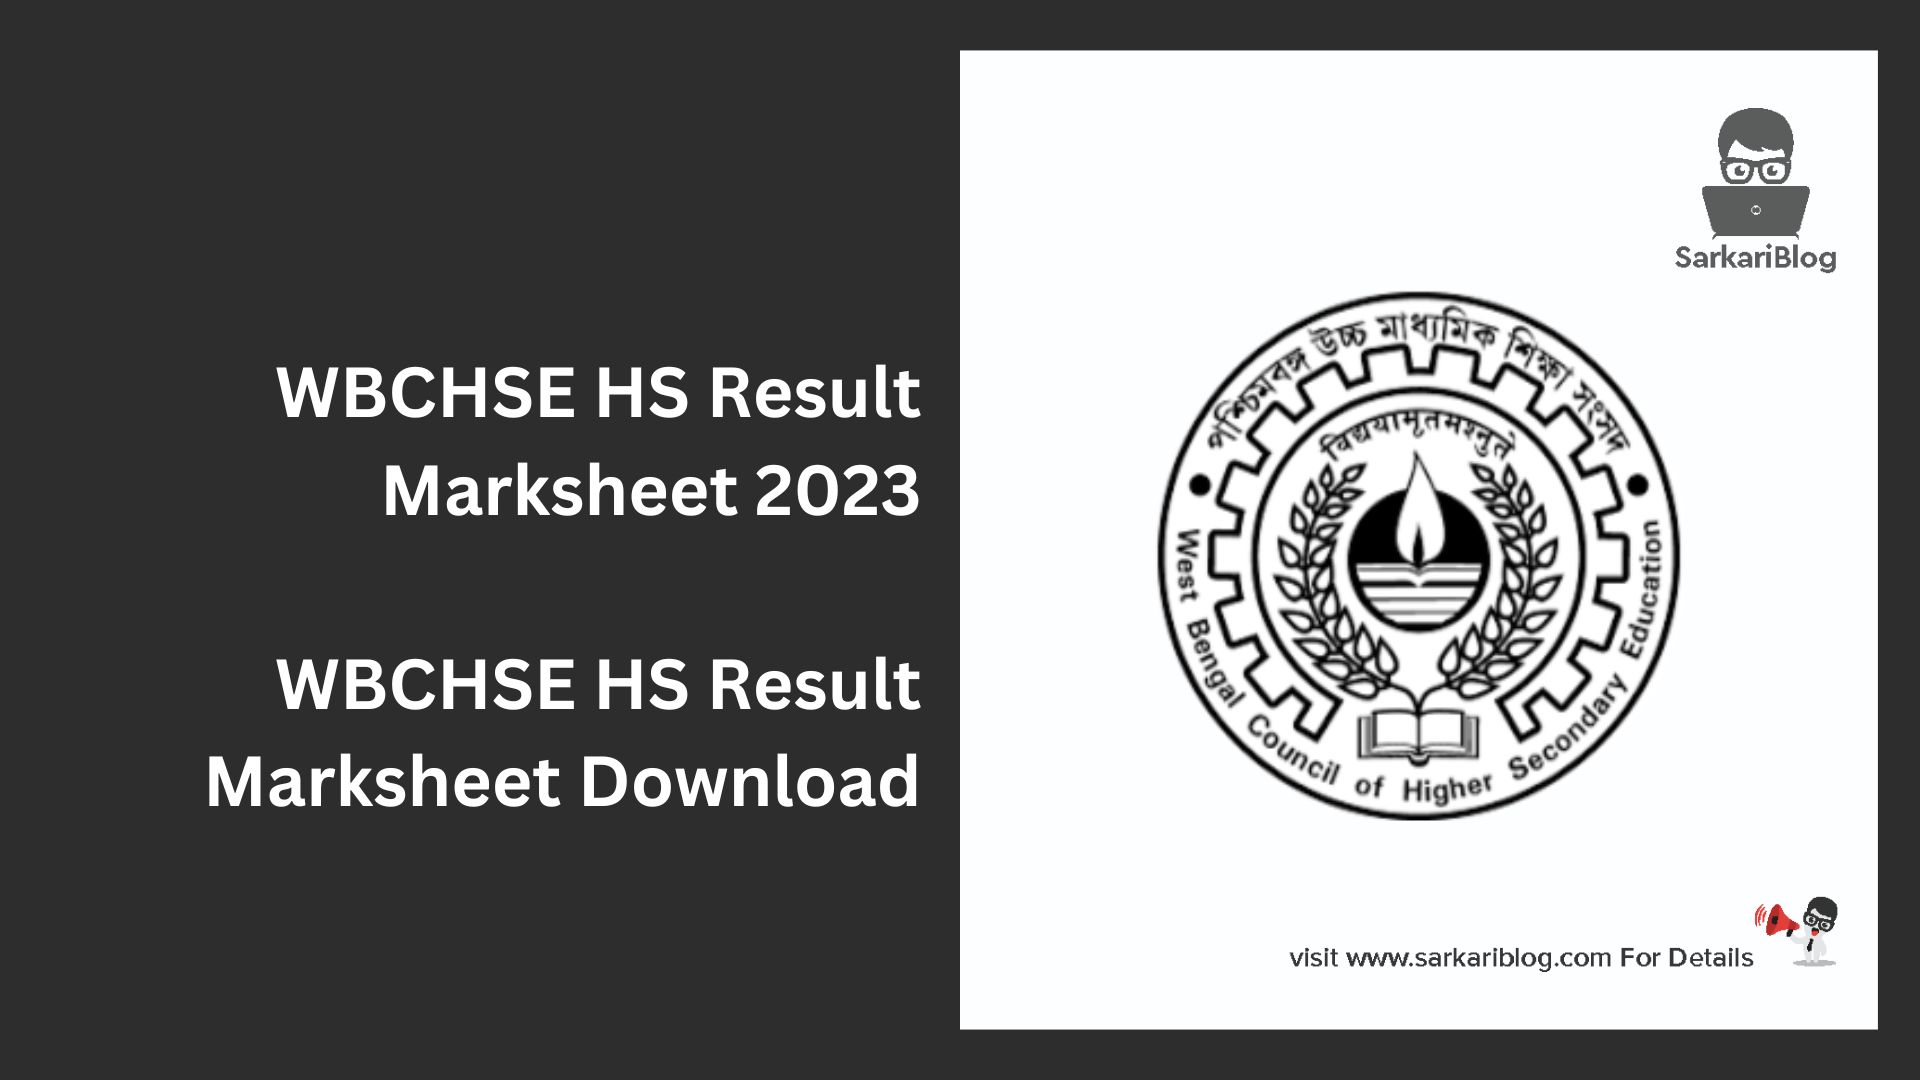 WBCHSE HS Result Marksheet 2023